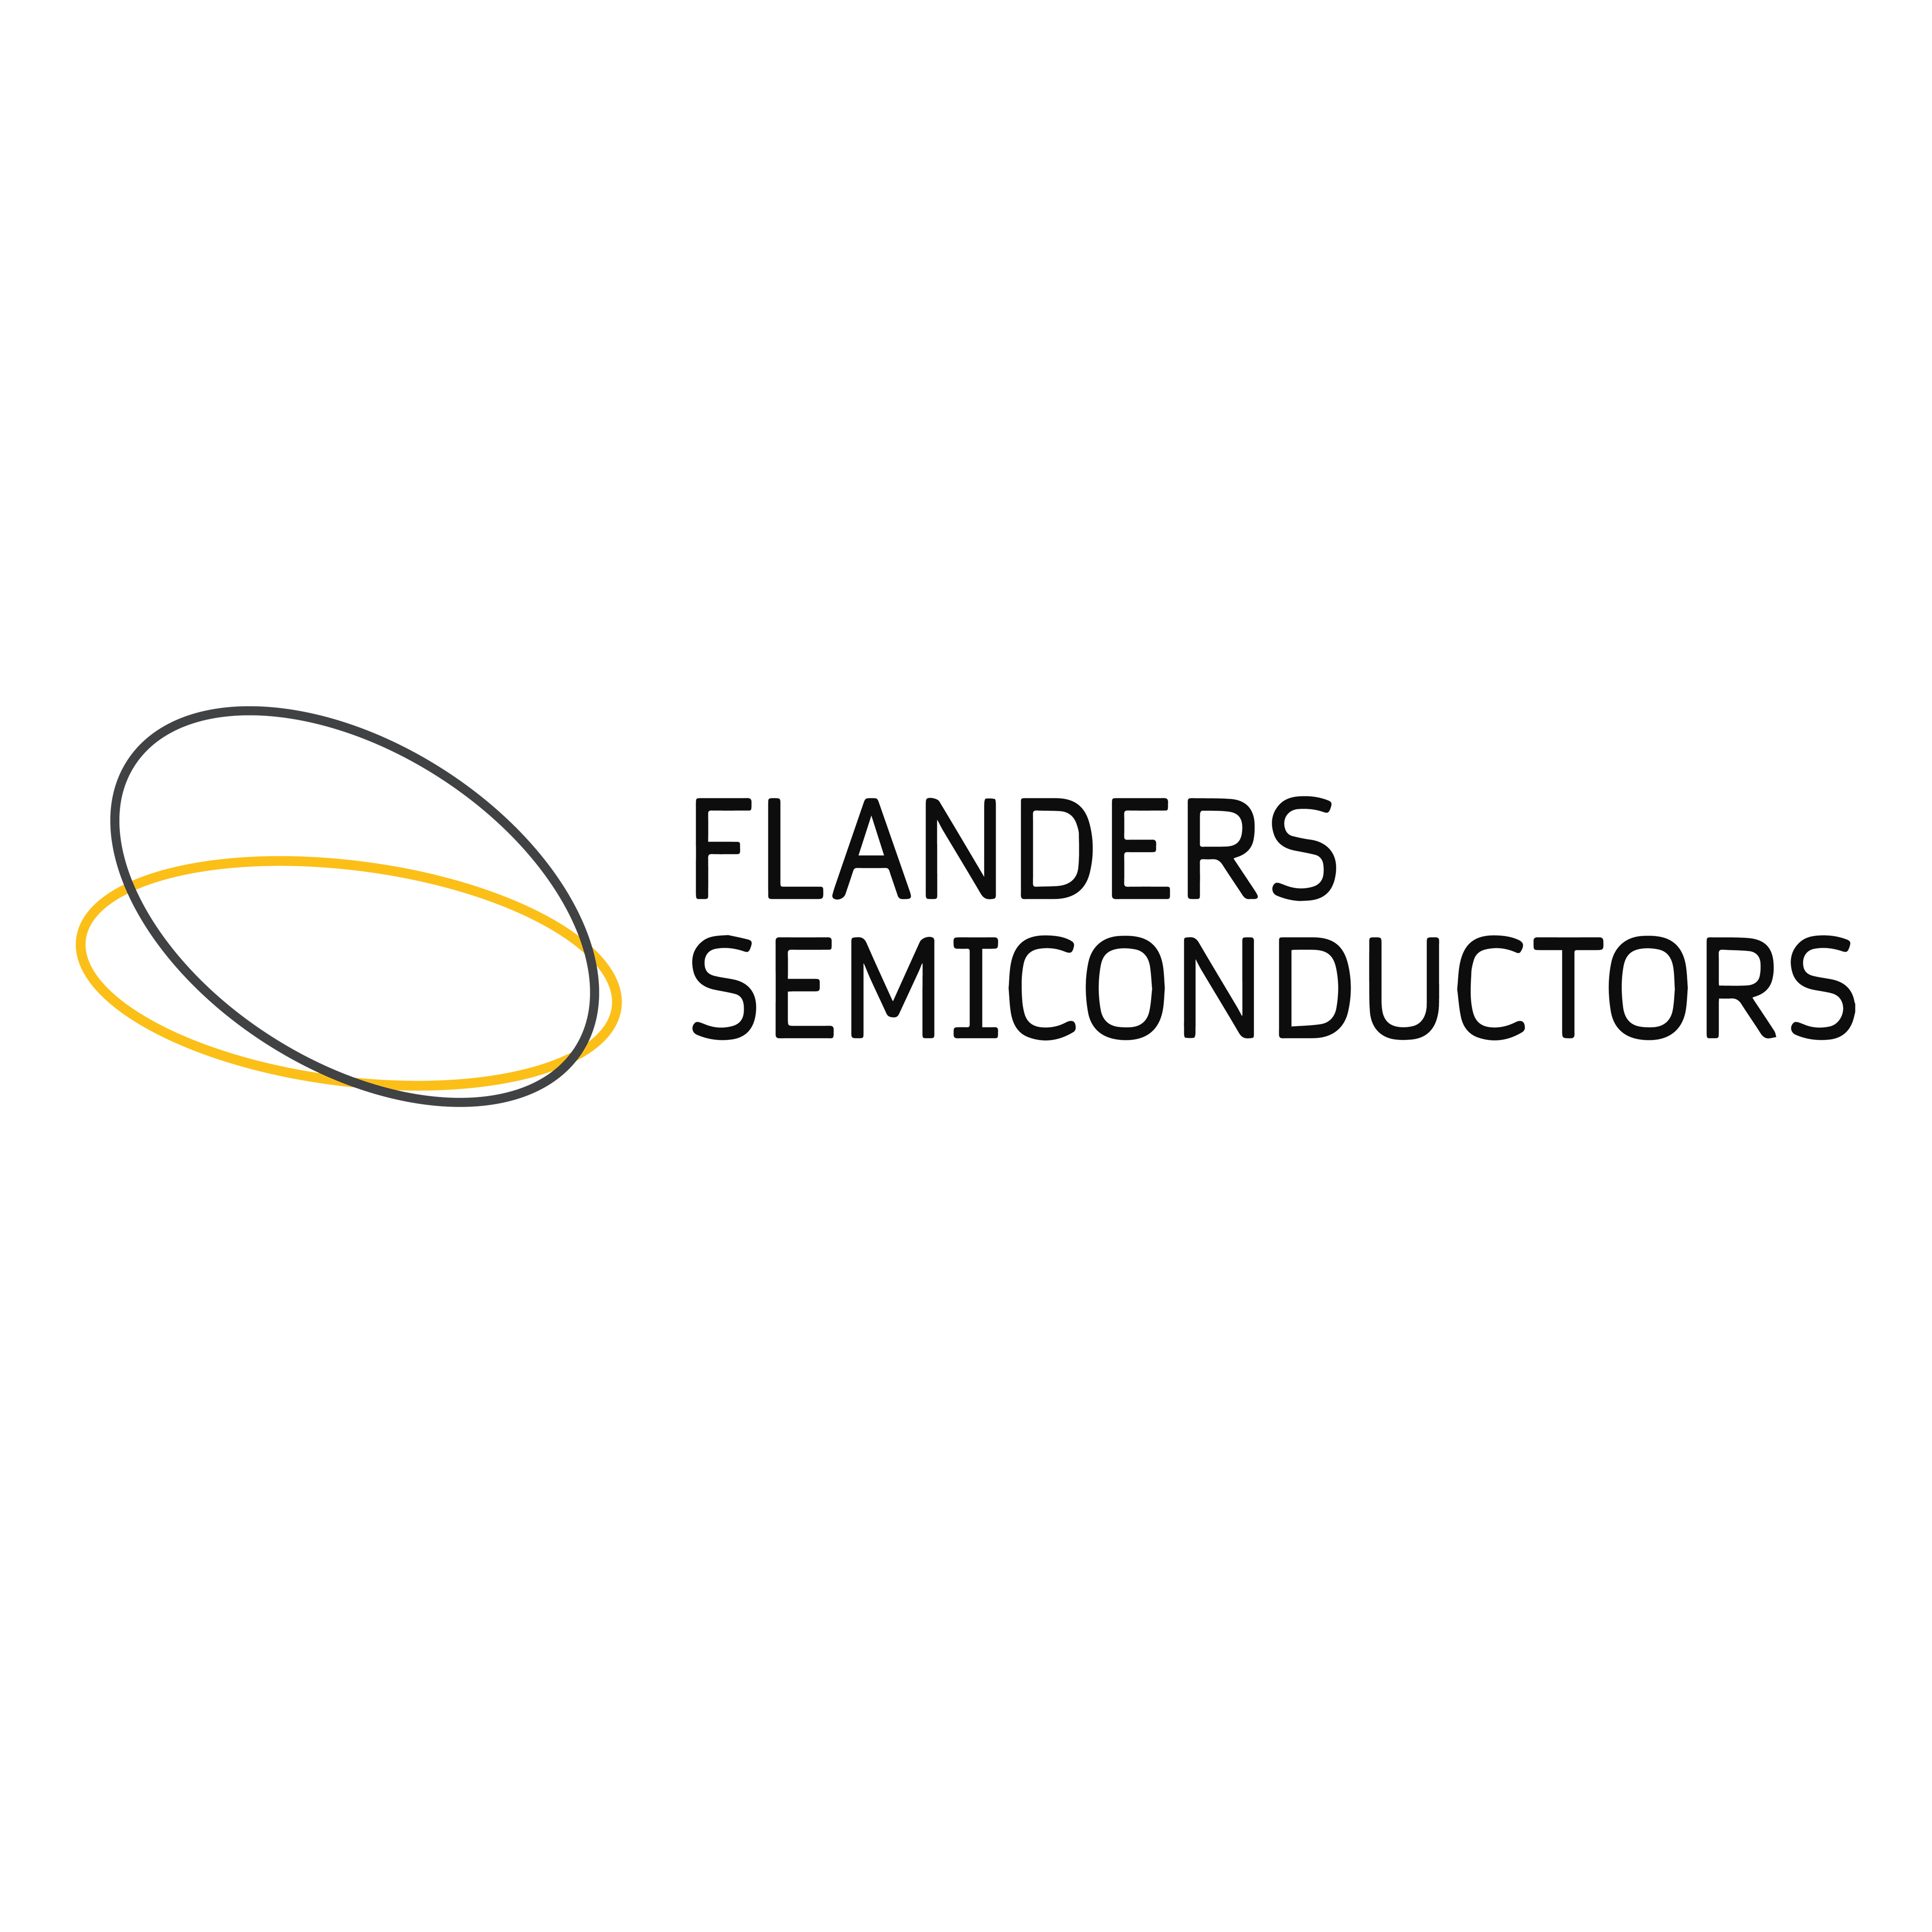 Flanders Semiconductors